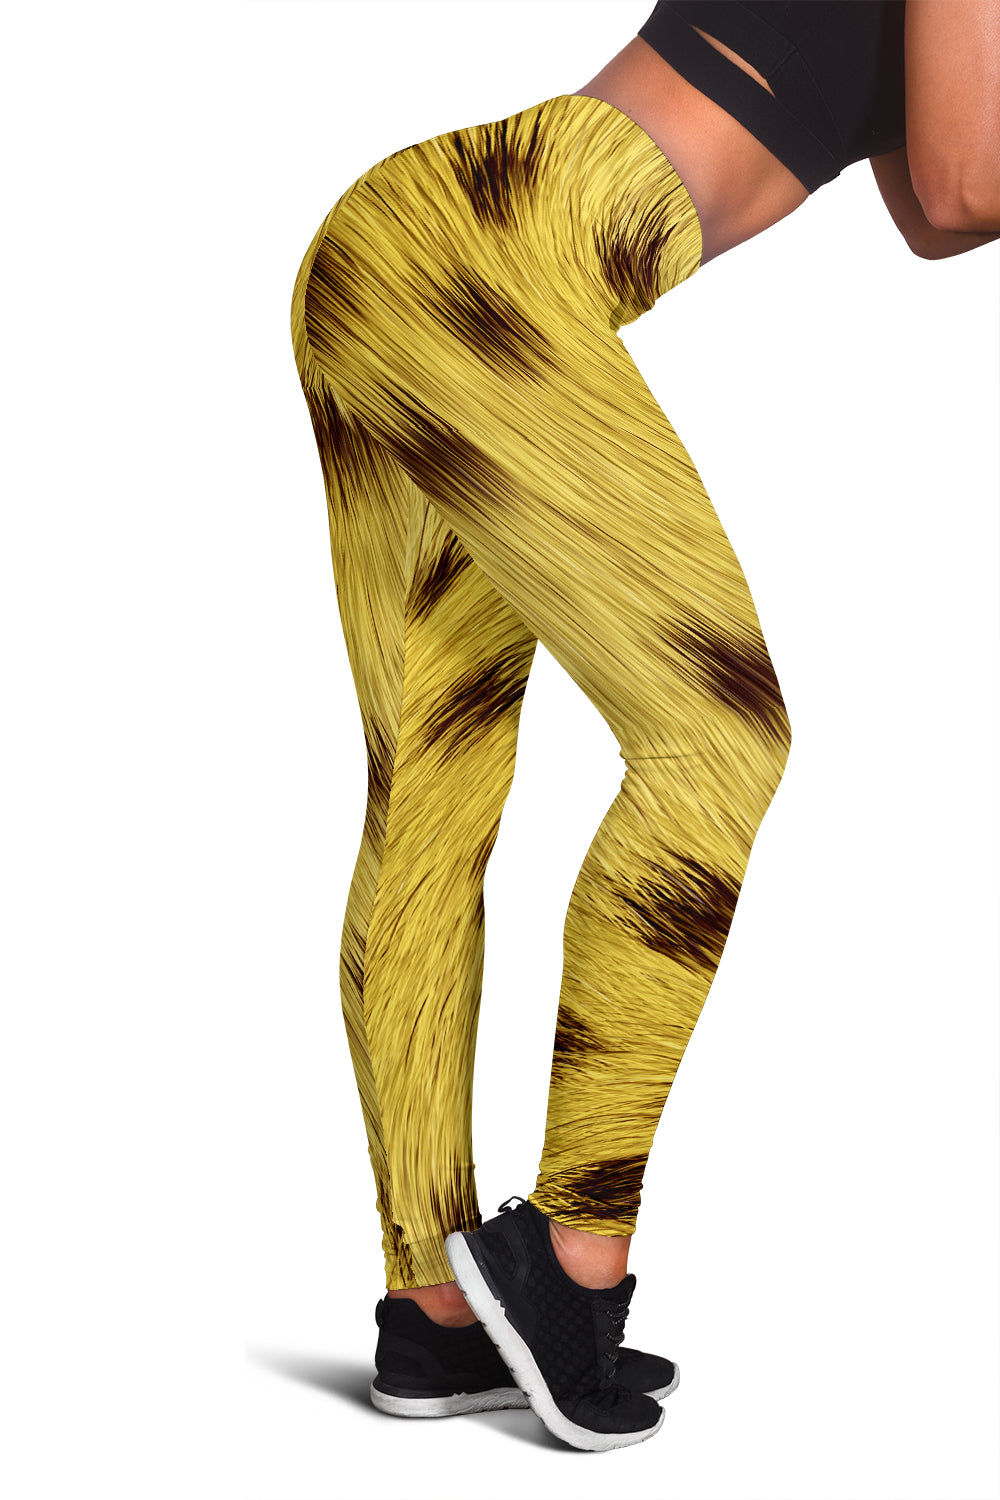 Women Leggings Sexy Printed Fitness Fashion Gym Dance Workout Animal Texture Theme O01